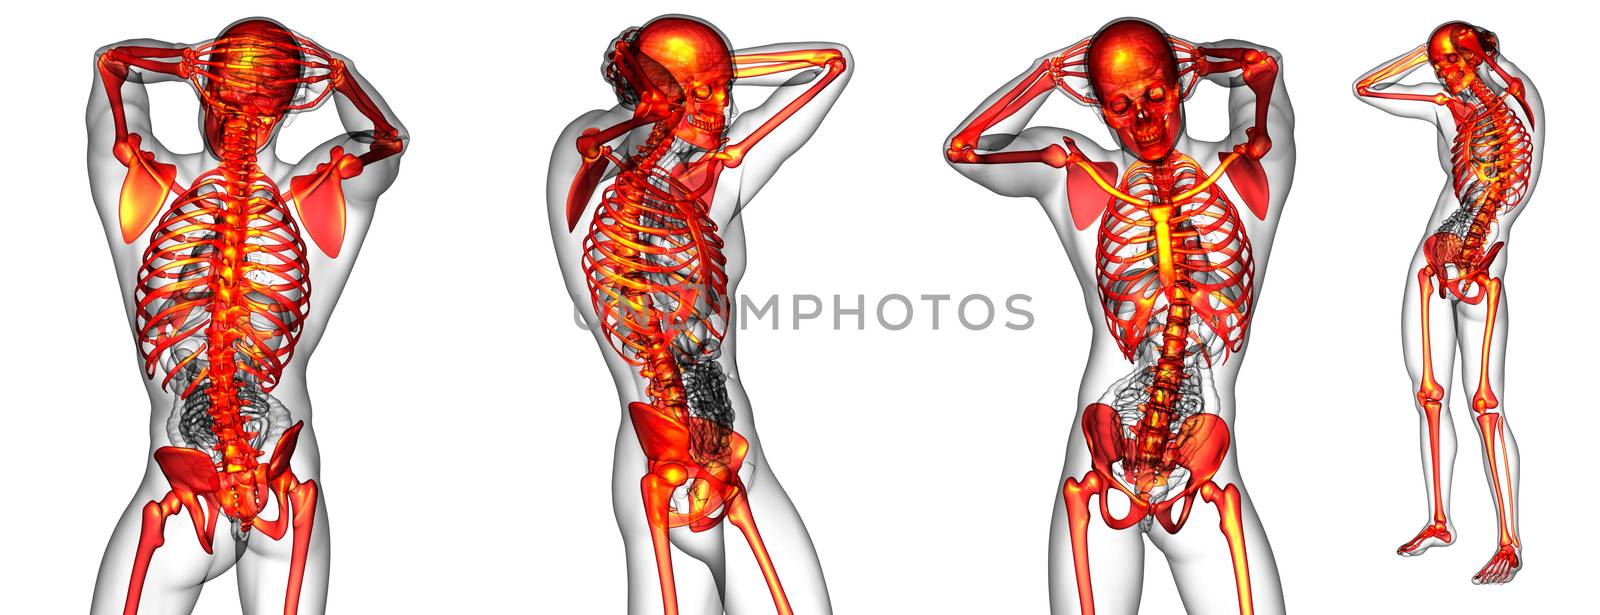 3d rendering medical illustration of the human skeleton by maya2008